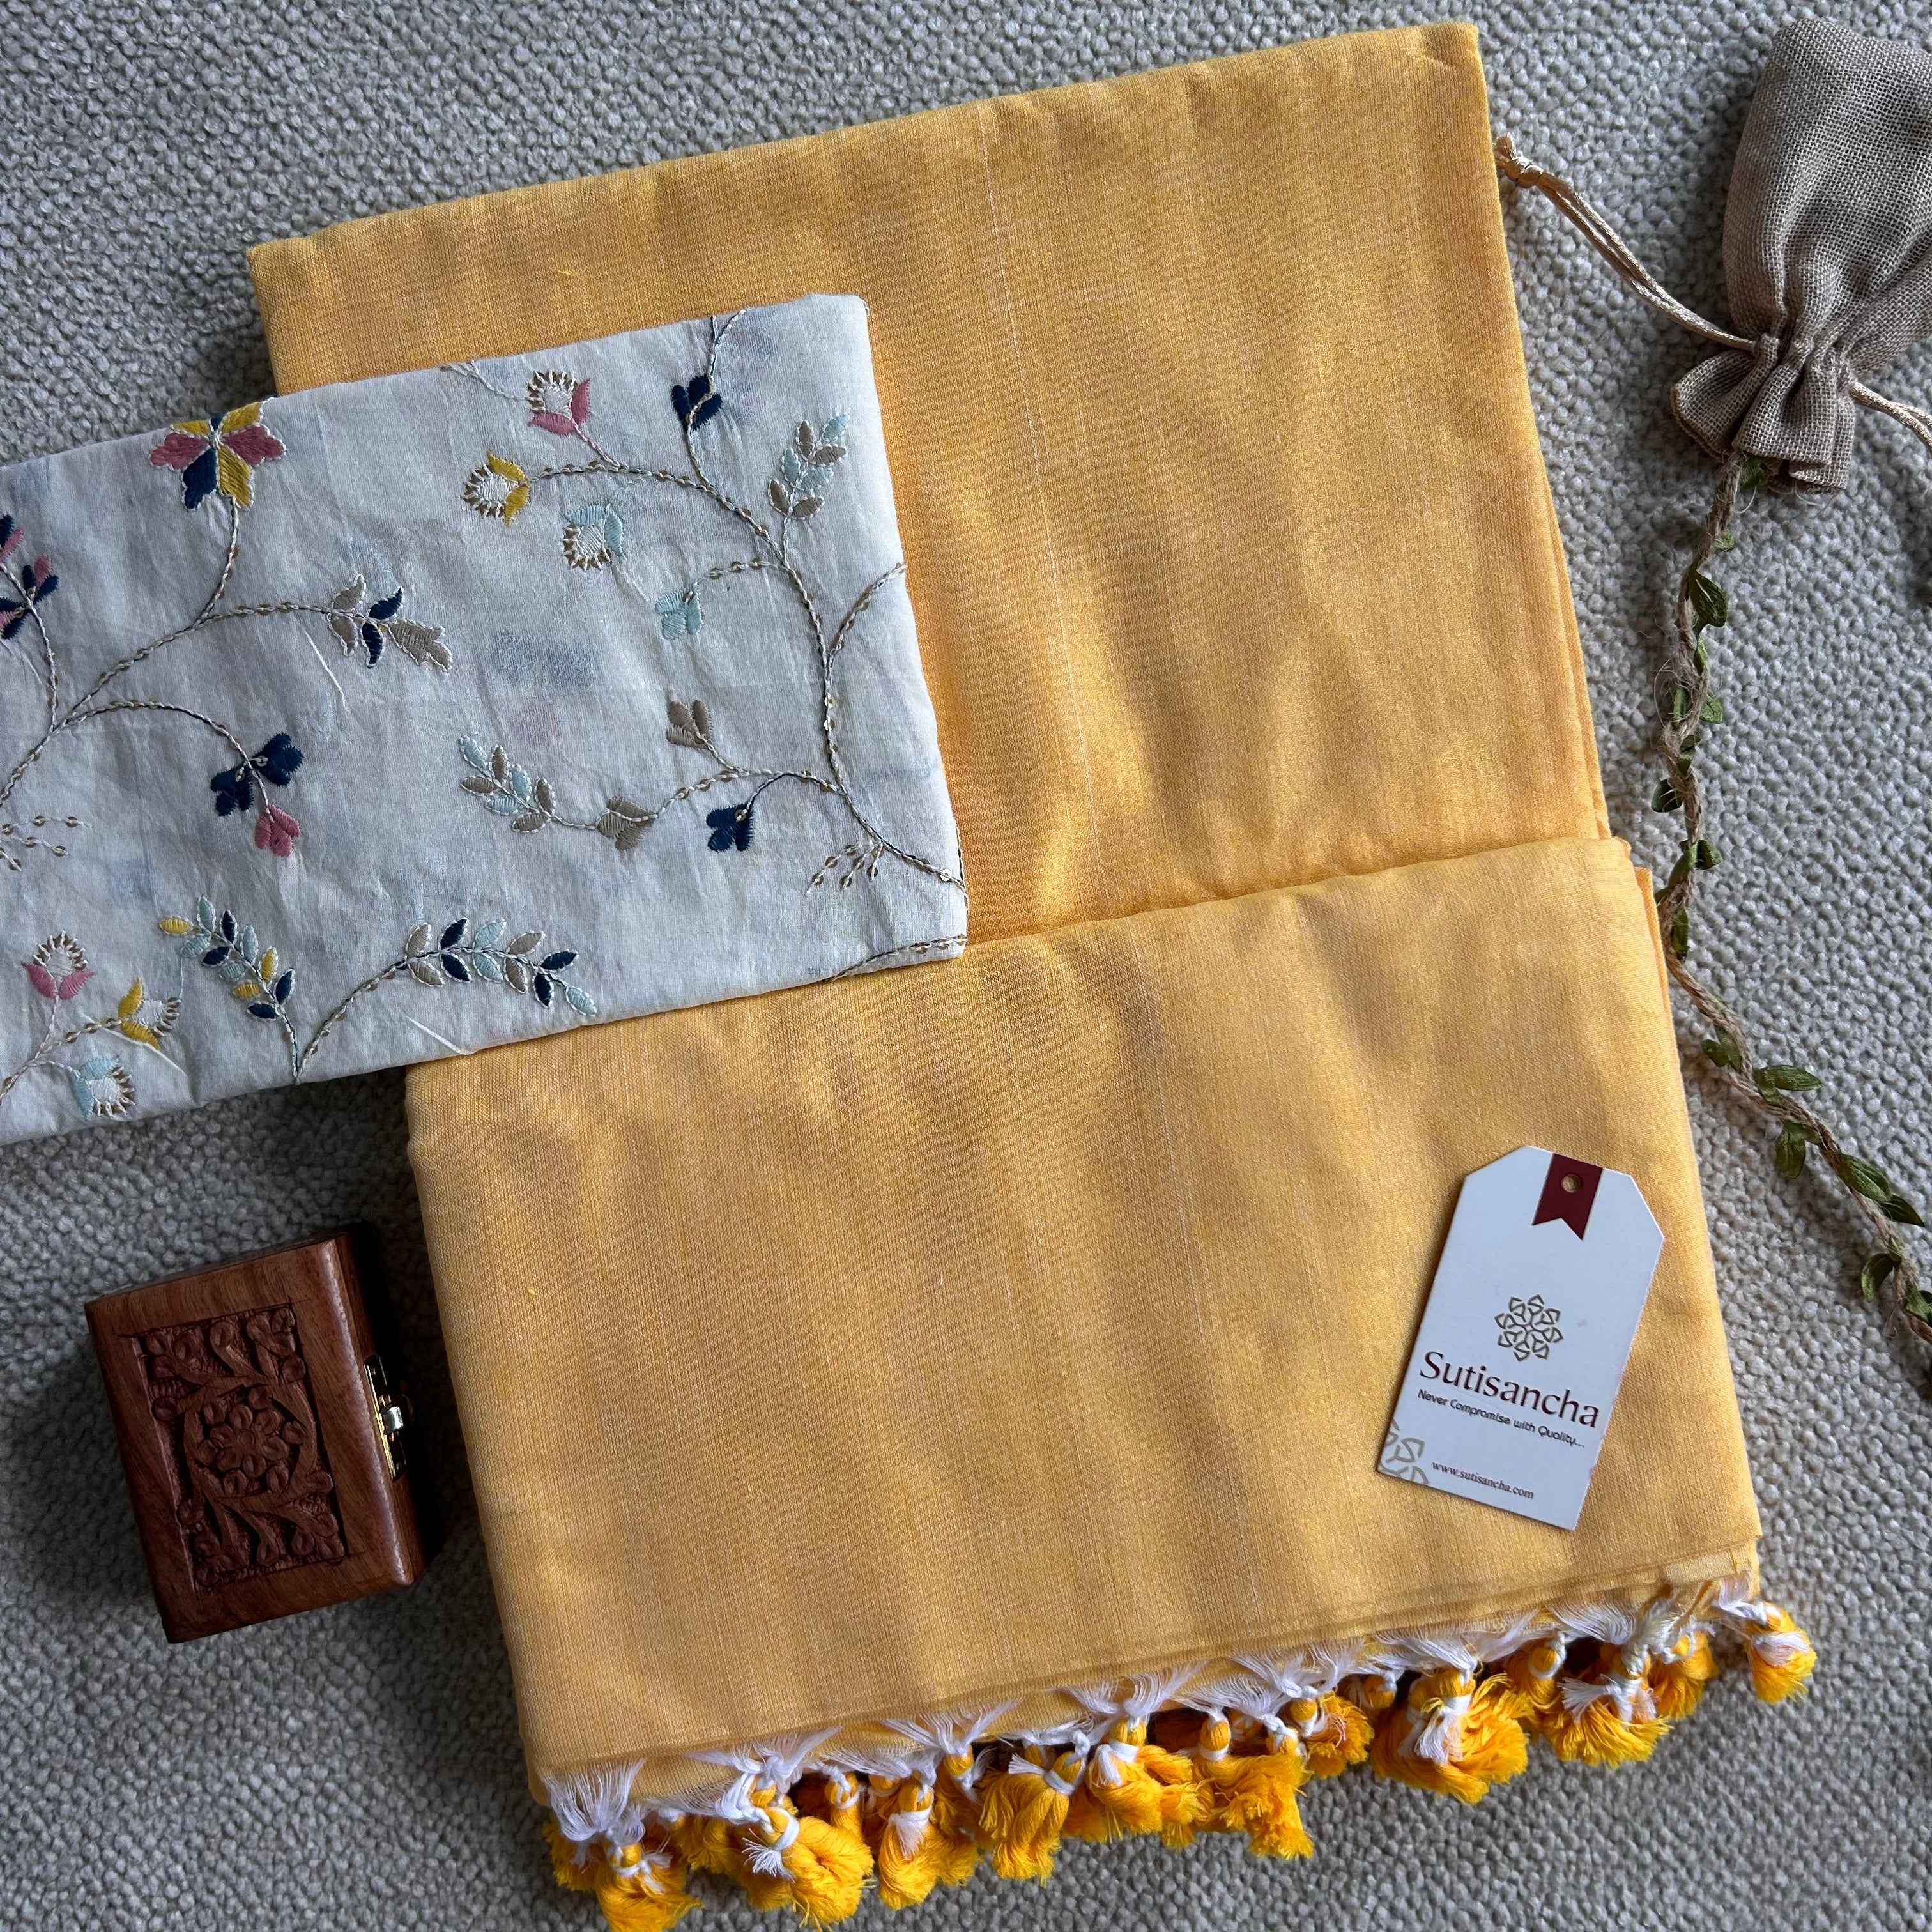 Sutisancha Yellow Handloom Cotton Saree with Designer Blouse